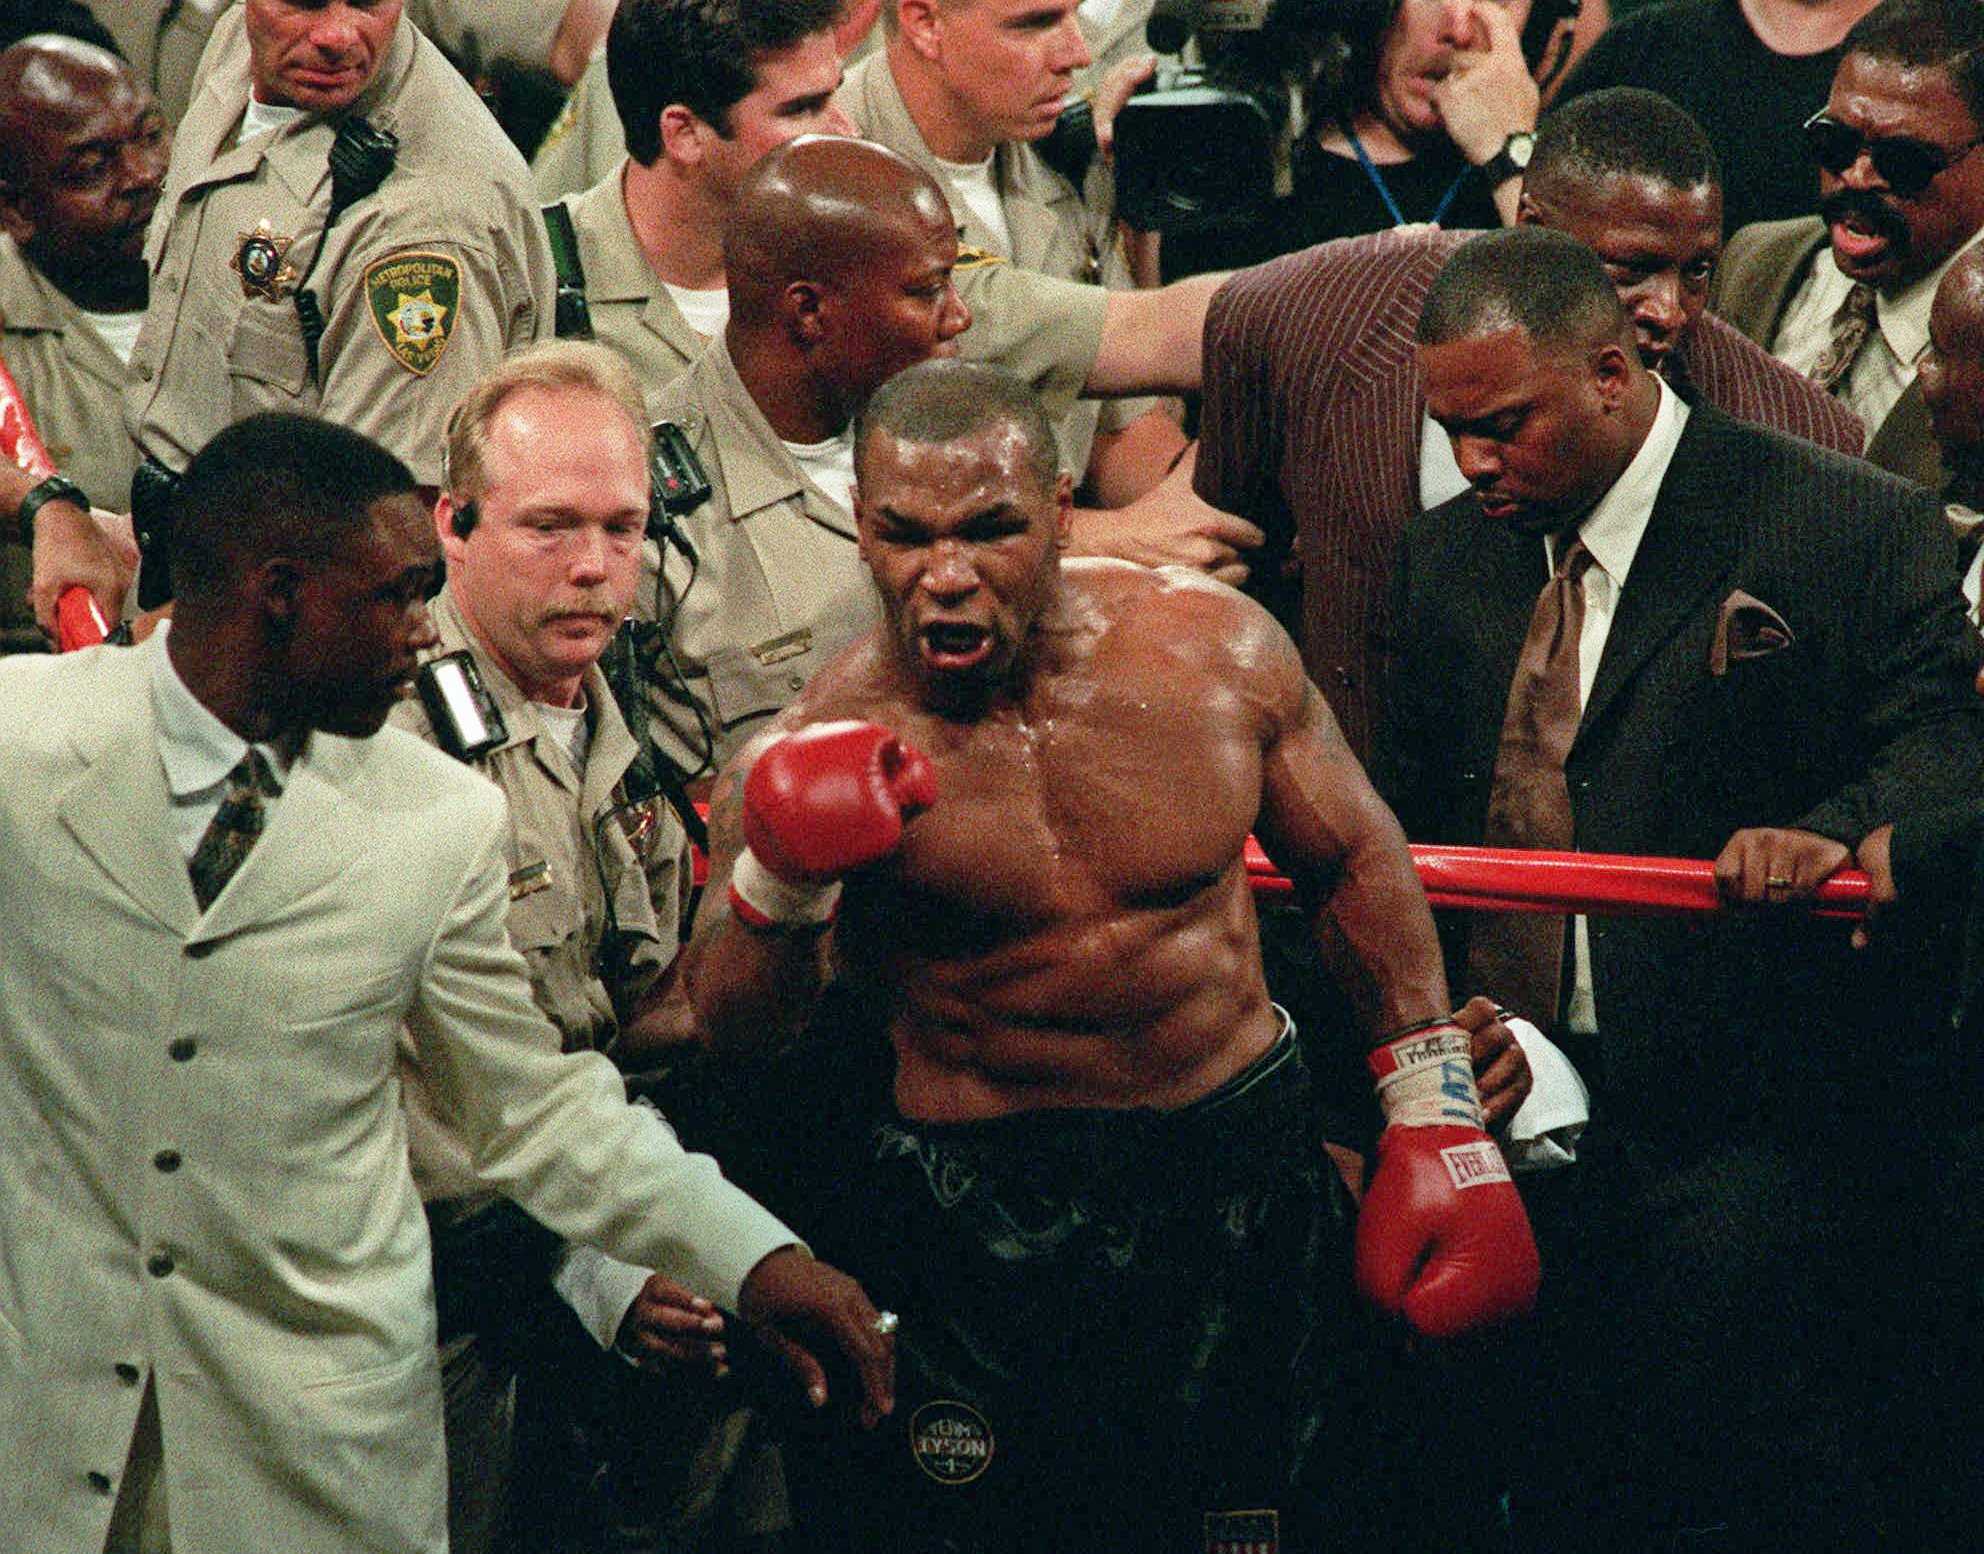 Remembering Tyson-Holyfield II: The Bite Fight - ESPN Video